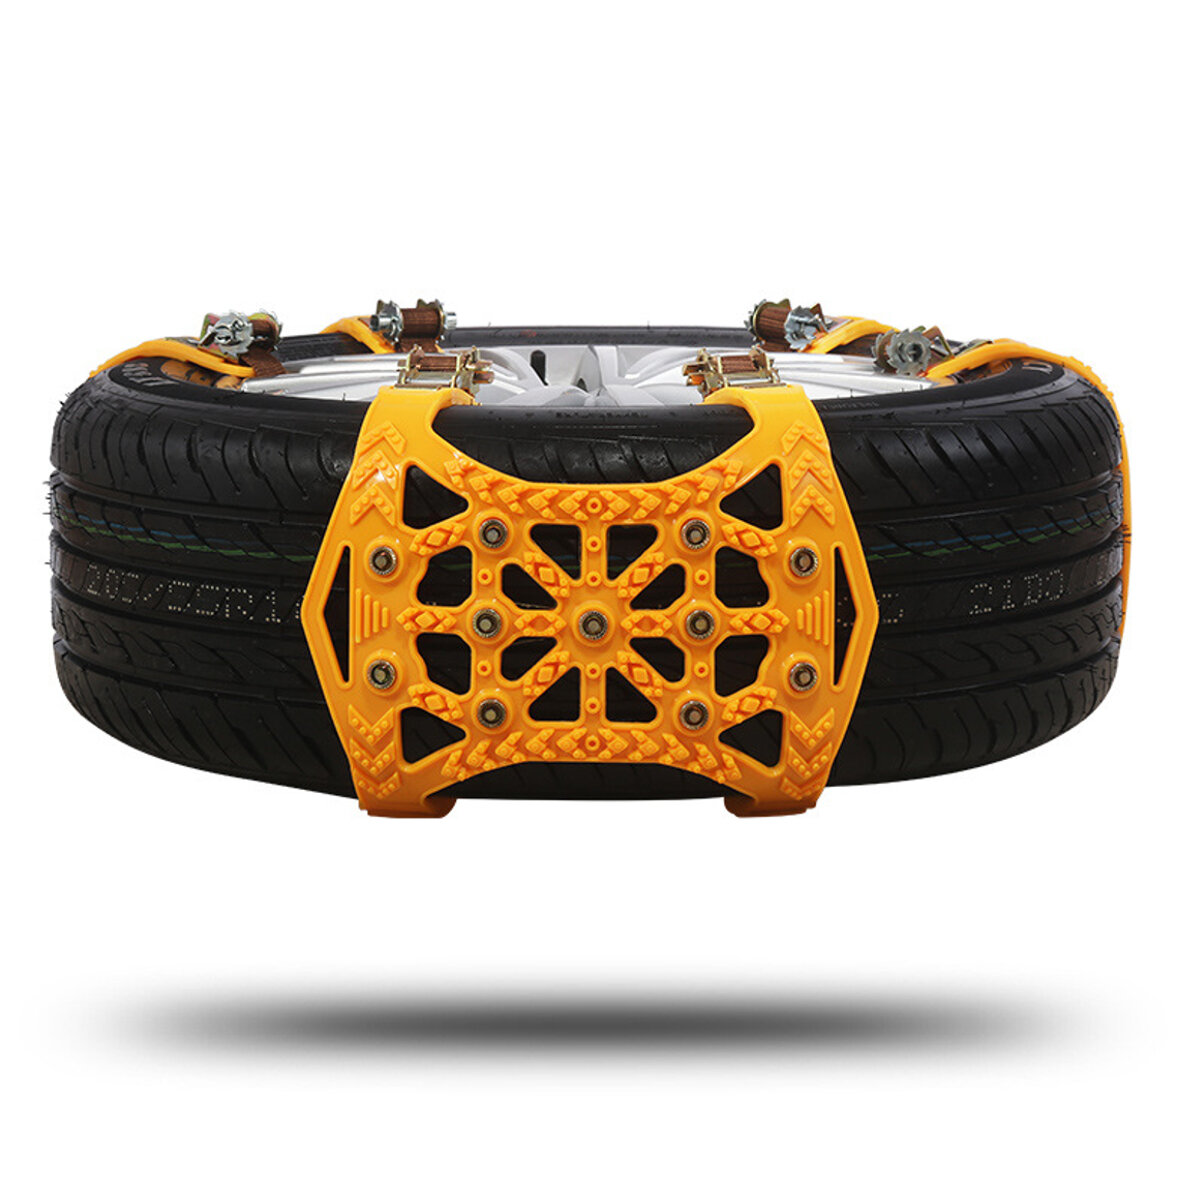 Universal Tire Snow Anti-Skid Chains For Car Truck SUV ORV Emergency Winter